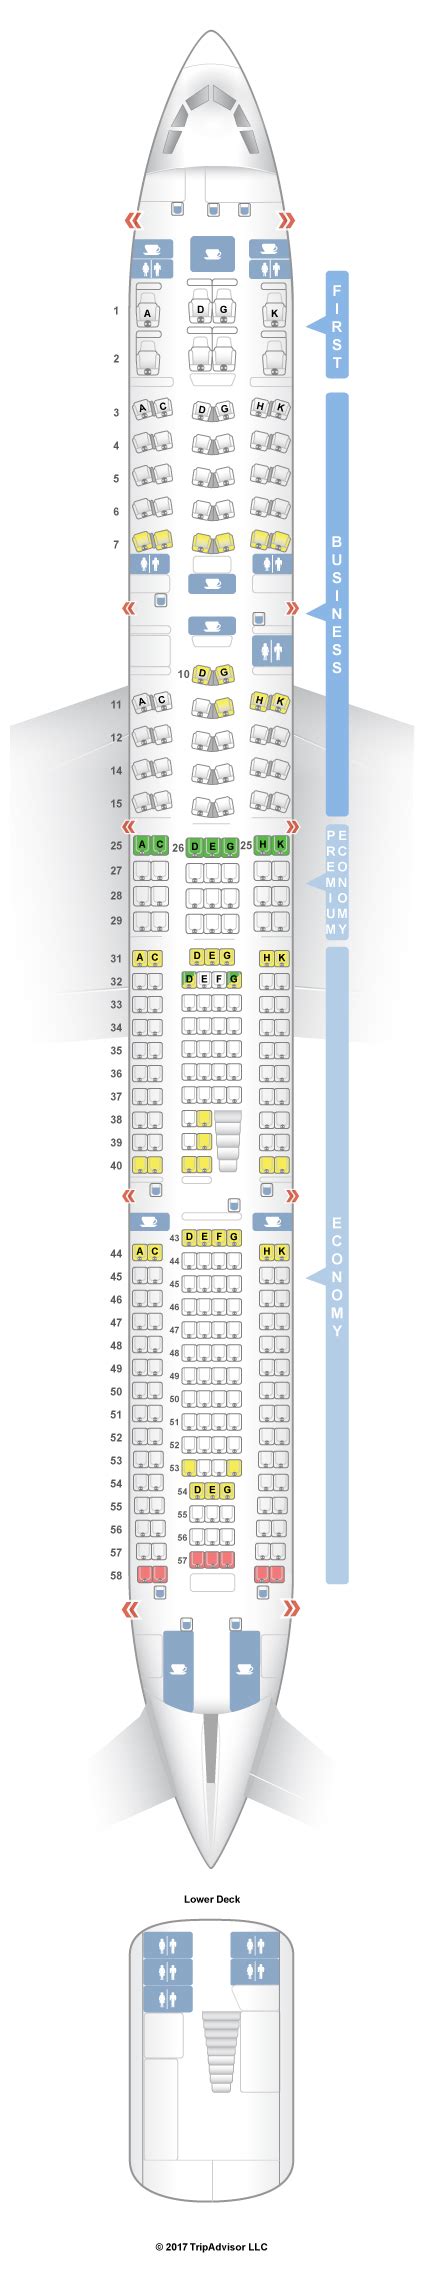 Seatguru Seat Map Lufthansa Airbus A340 600 346 V2 Seatguru Map Hot